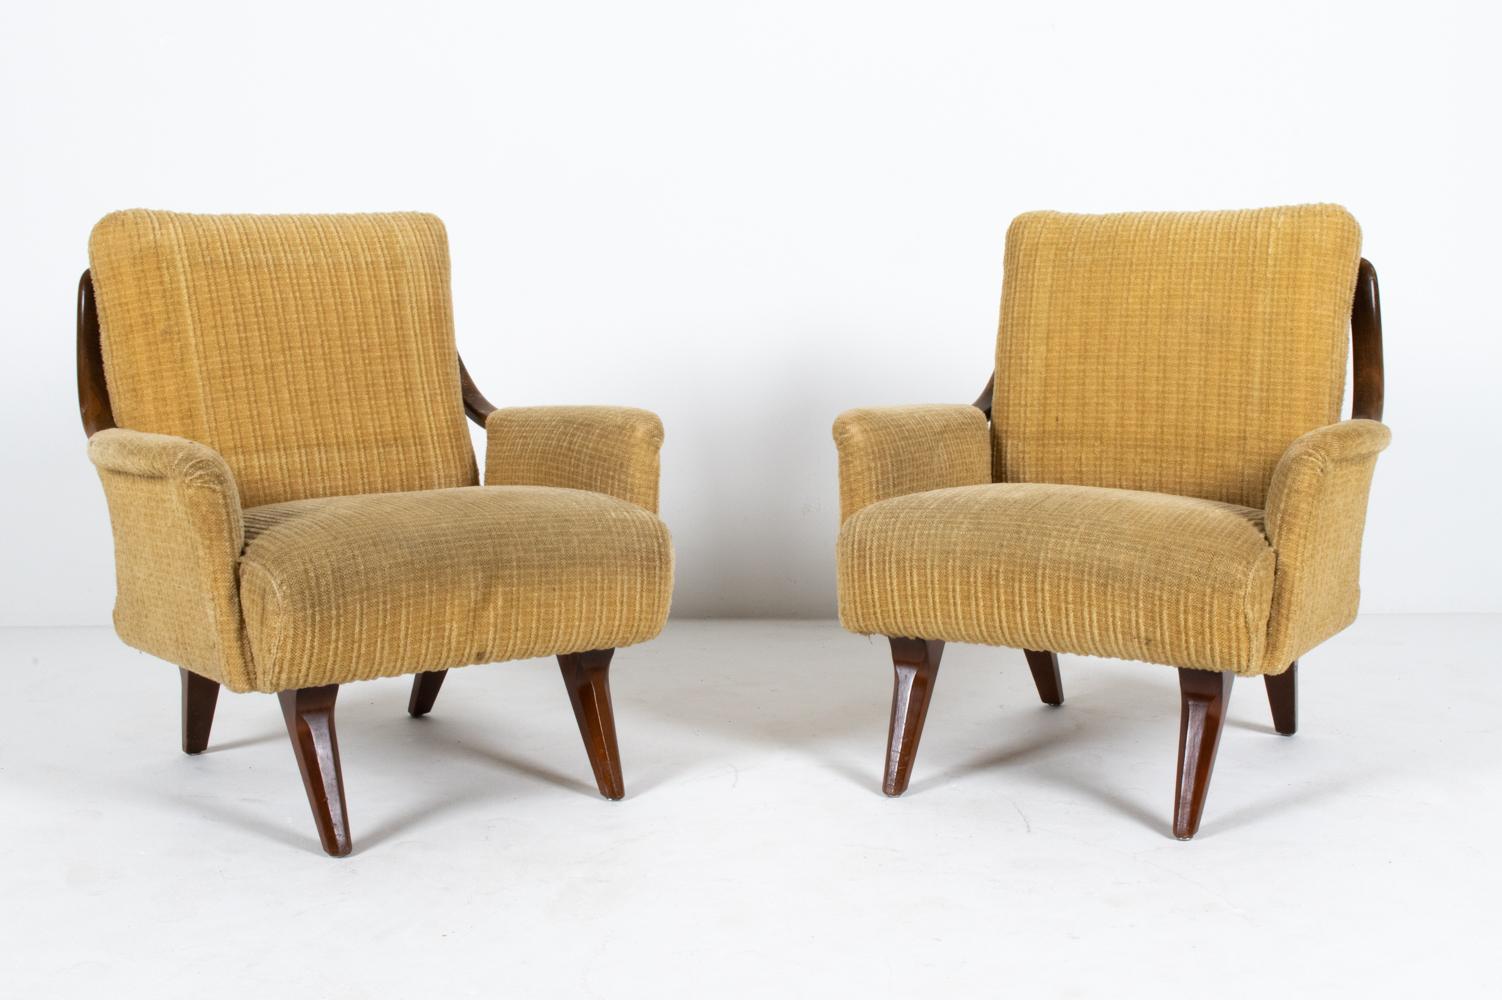 Scandinavian Modern Pair of Scandinavian Mid-Century Lounge Chairs, c. 1950's For Sale